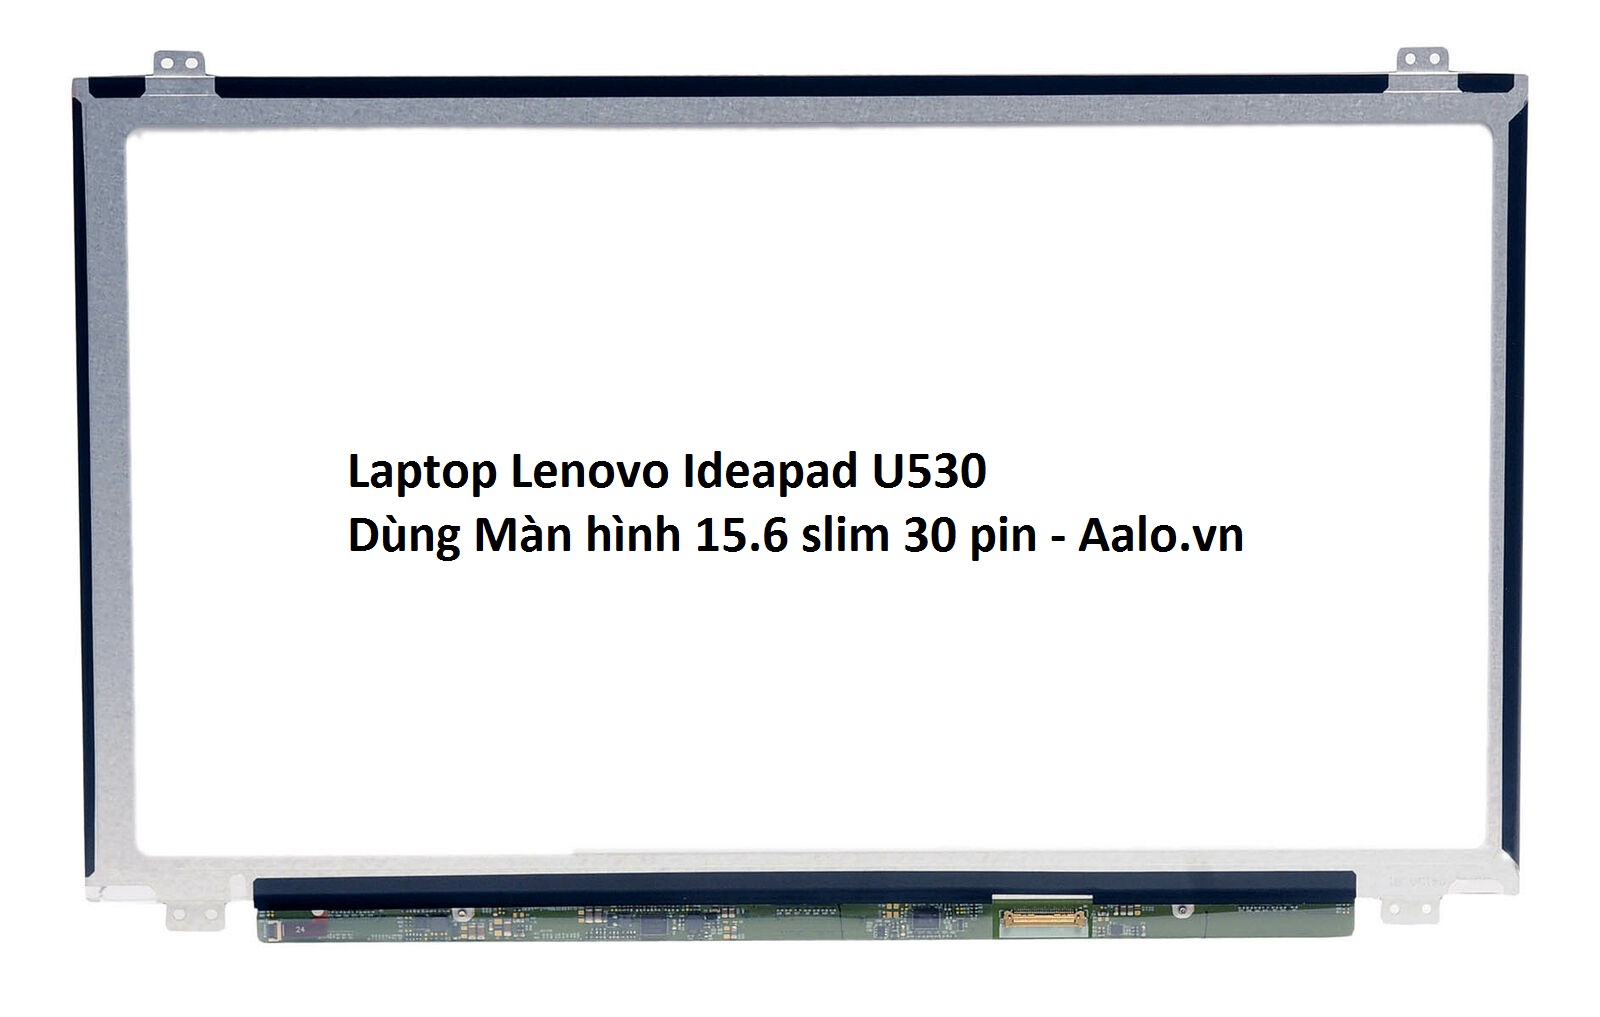 Màn hình Laptop Lenovo Ideapad U530 - Aalo.vn